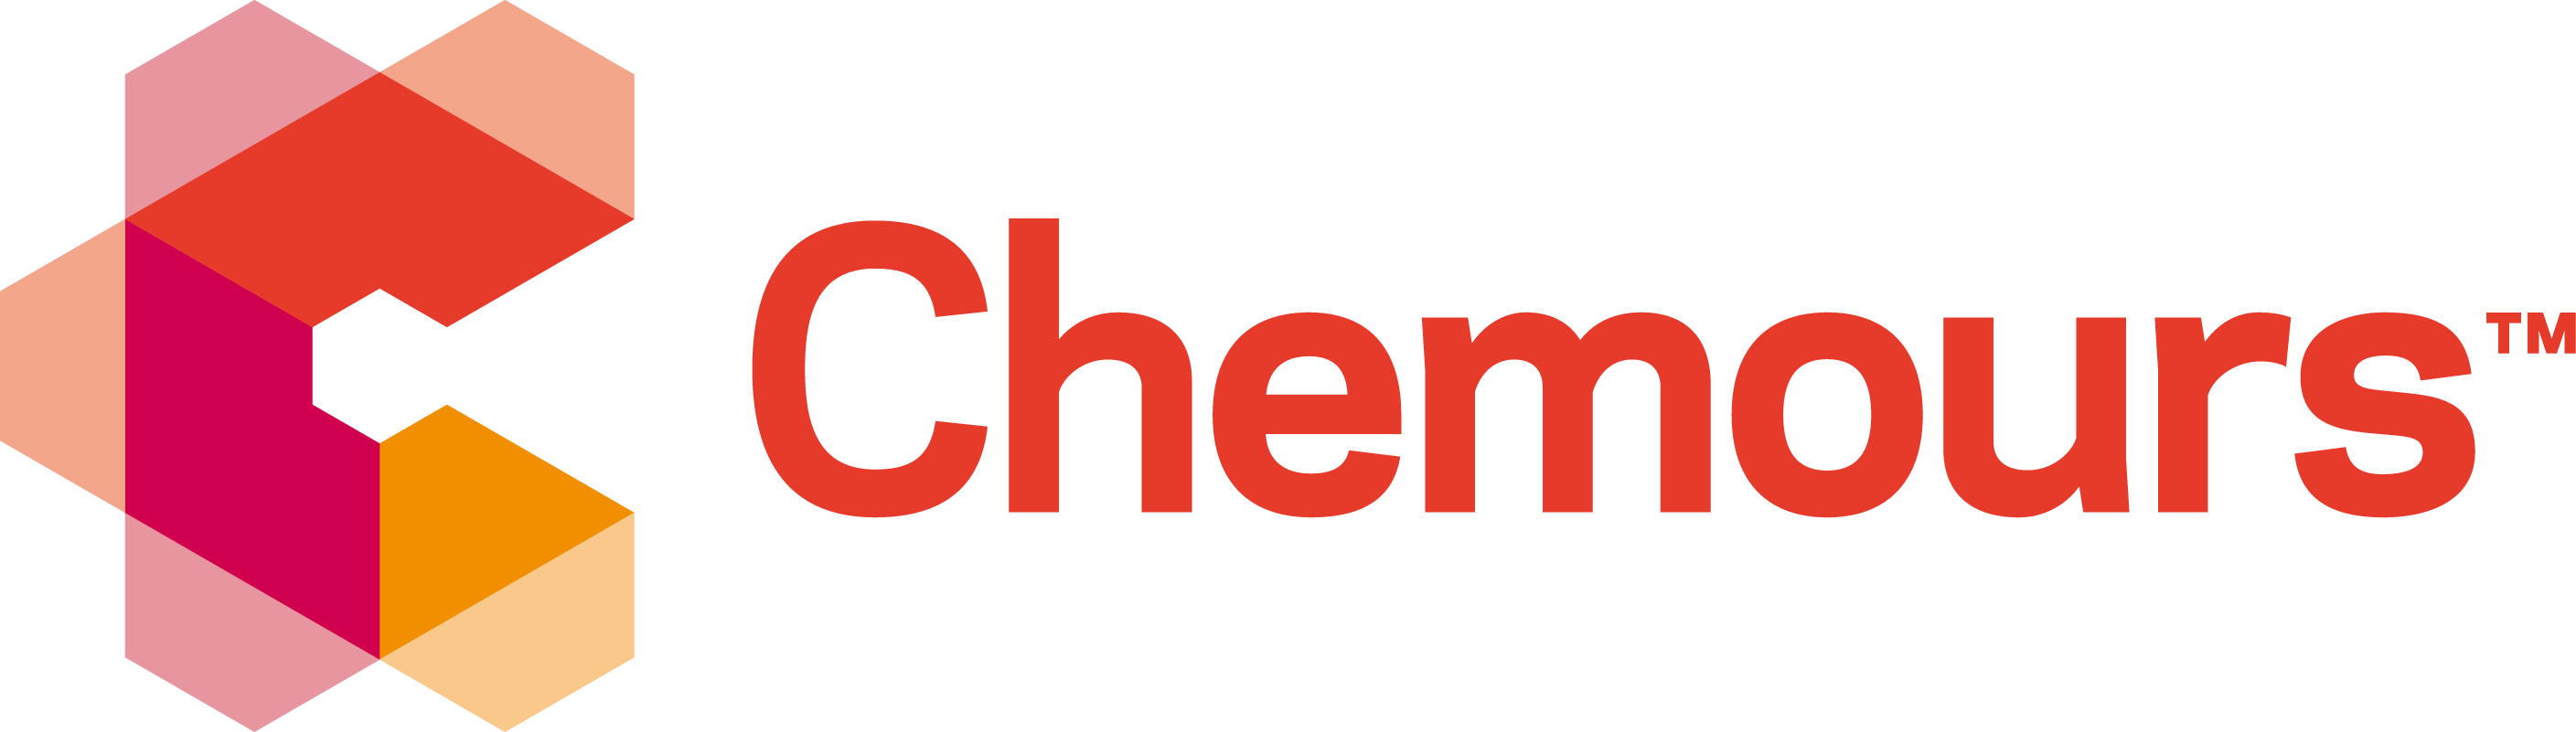 Chemours Logo Color